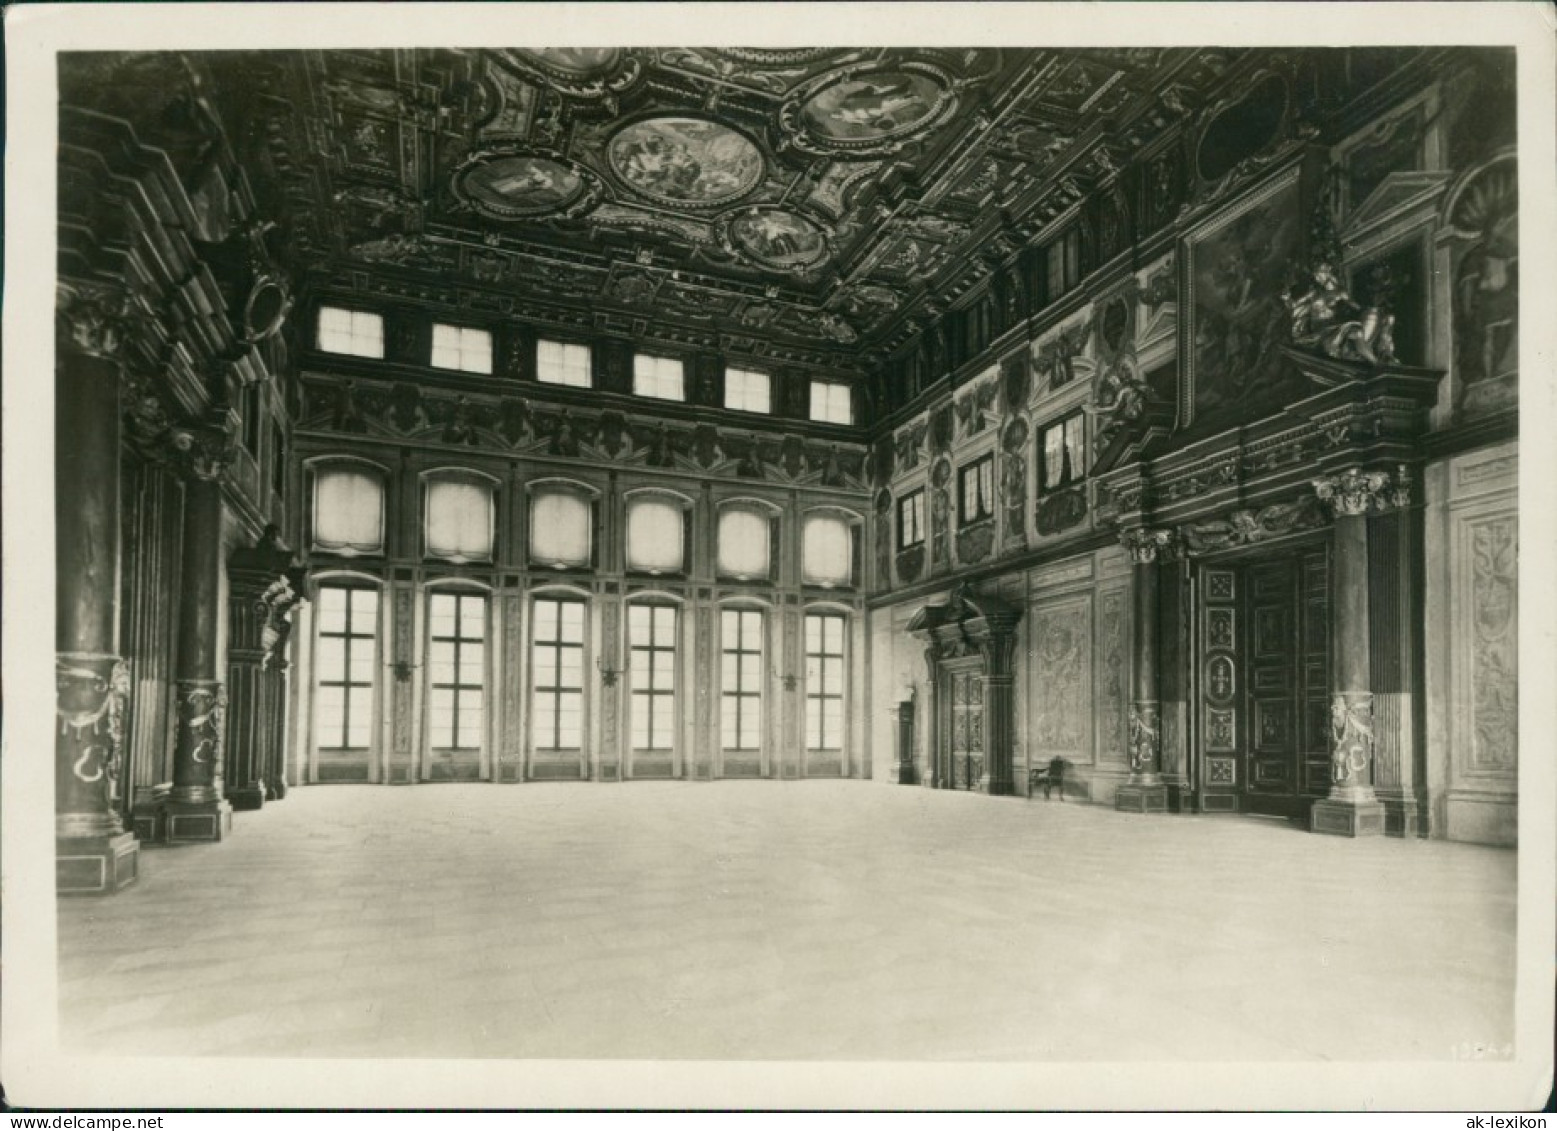 Ansichtskarte Augsburg Rathaus - Goldener Saal 1939 - Augsburg